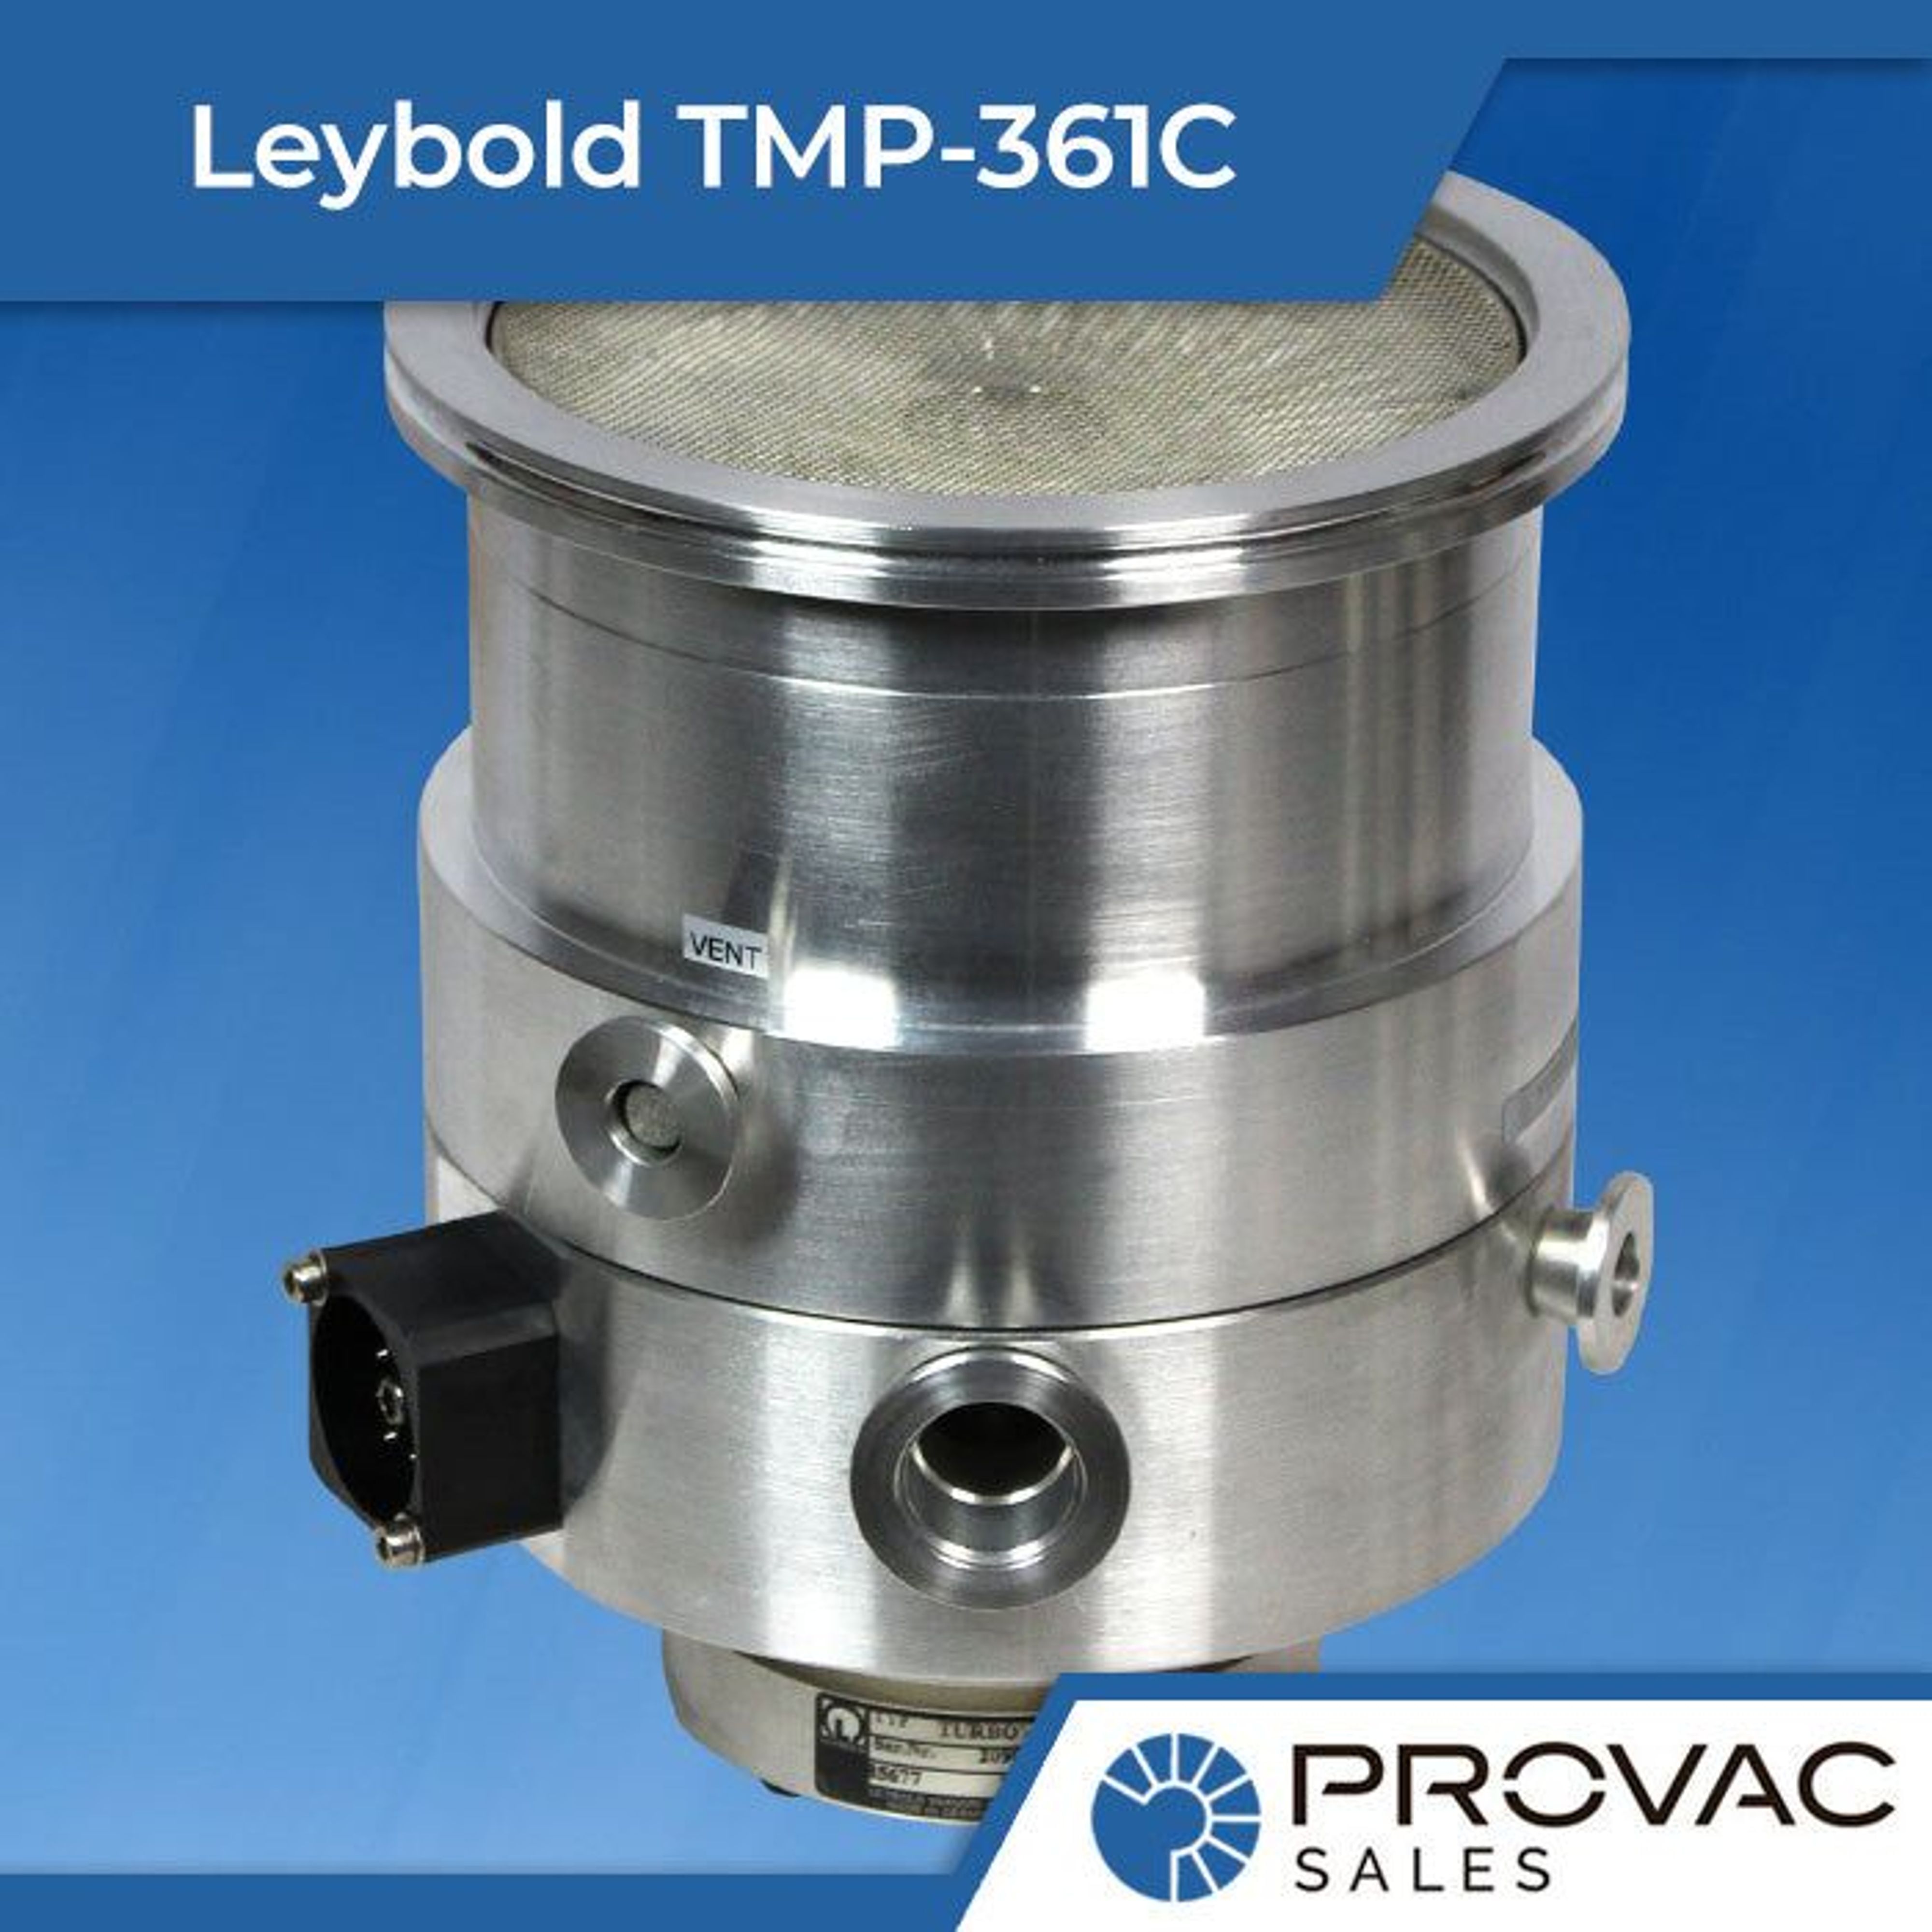 Leybold TMP-361C Turbomolecular Pump Background